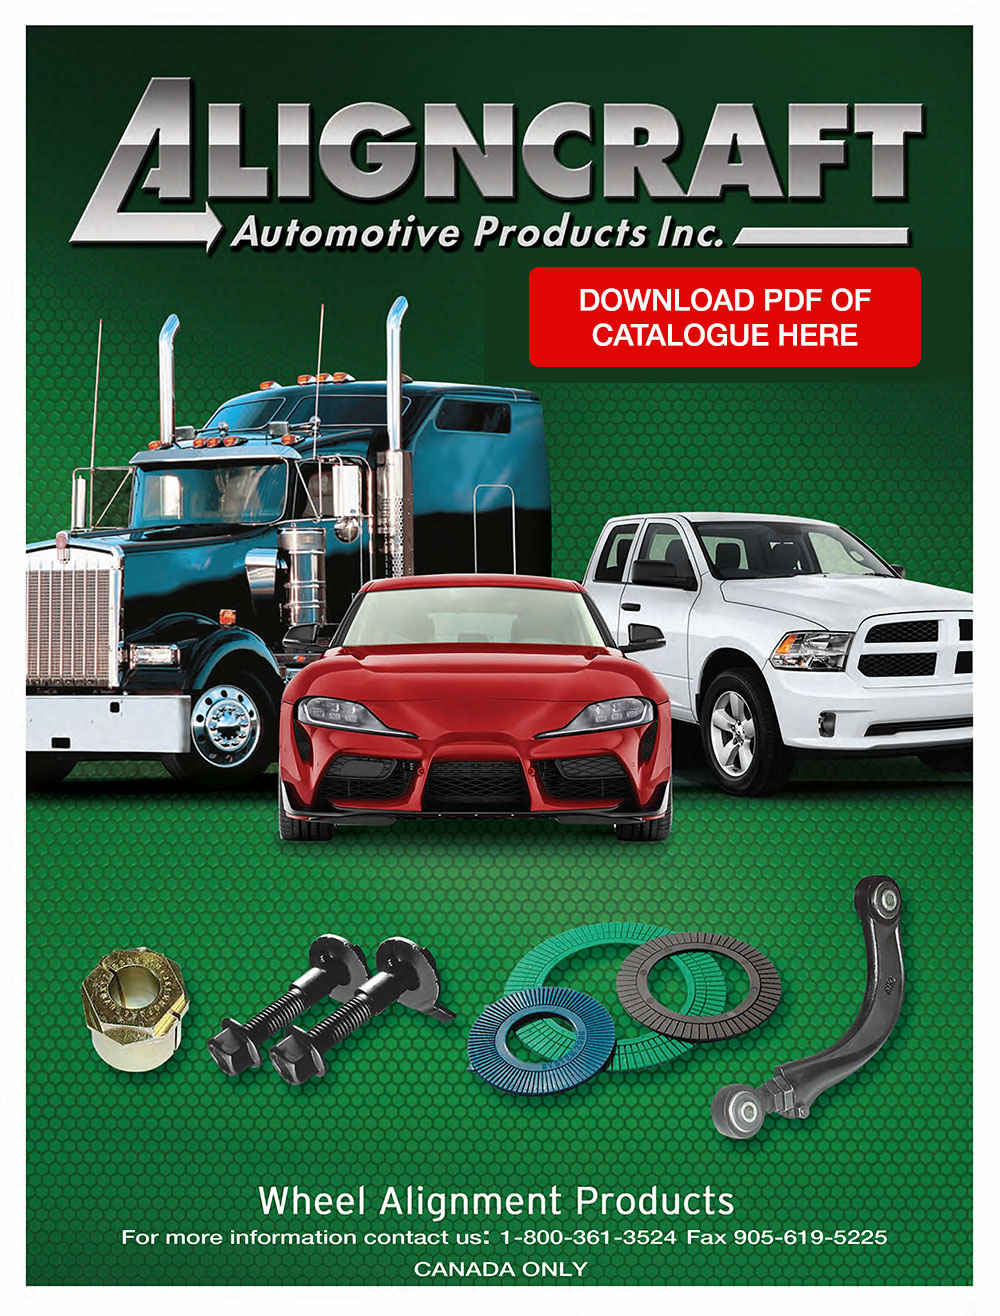 Aligncraft Automotive Product PDF